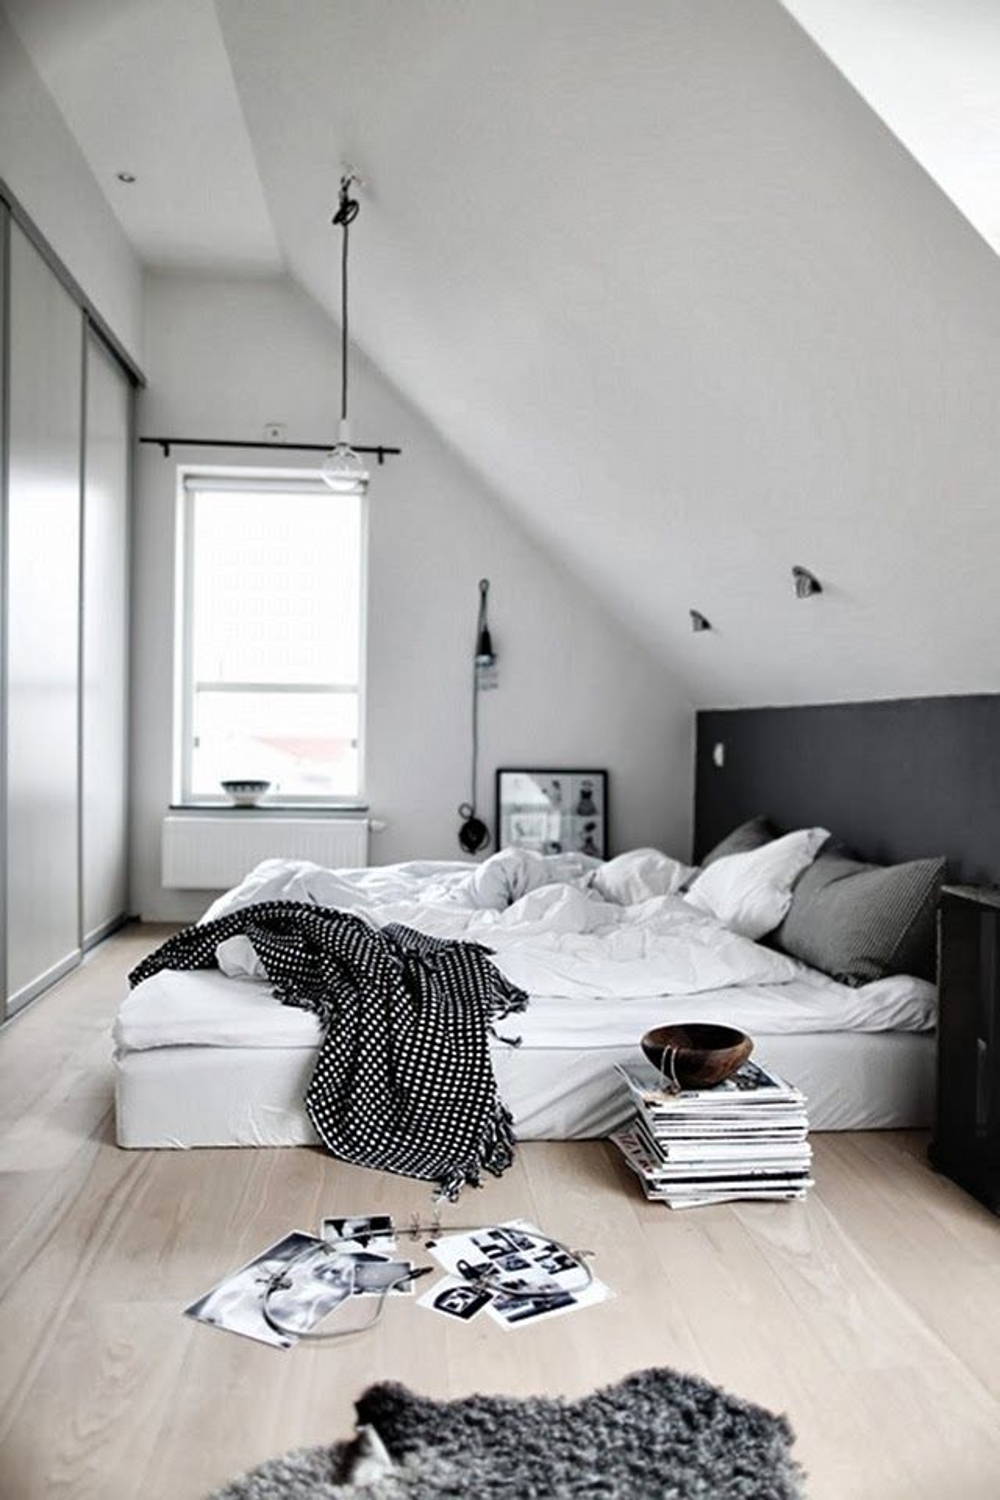 attic-Nordic-bedroom-in-black-white-accents